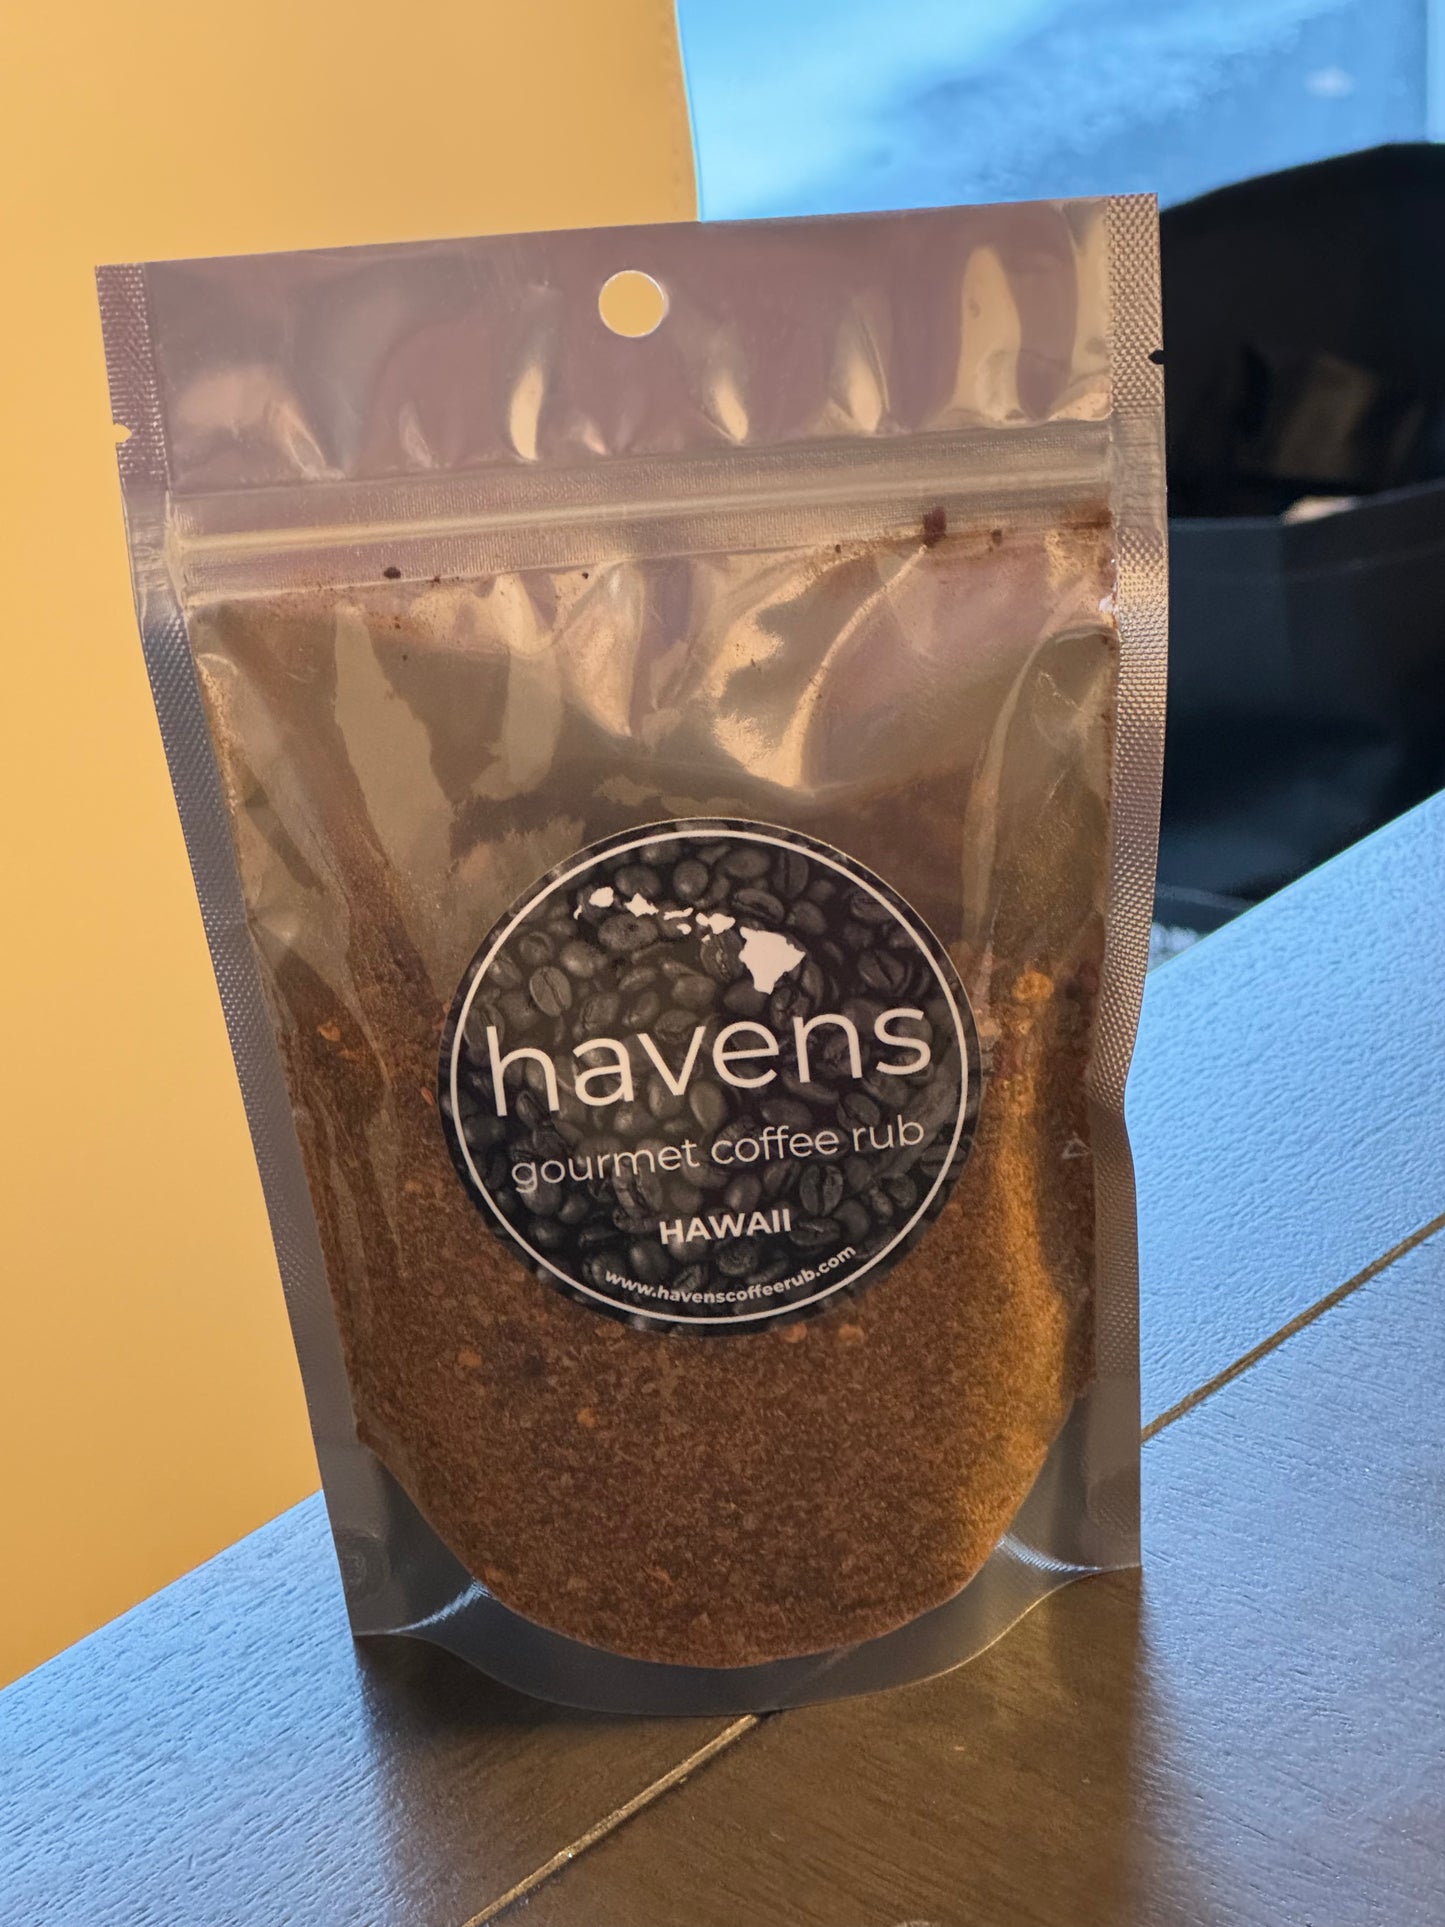 Havens Gourmet Coffee Rub Hawaii 6 oz Bag